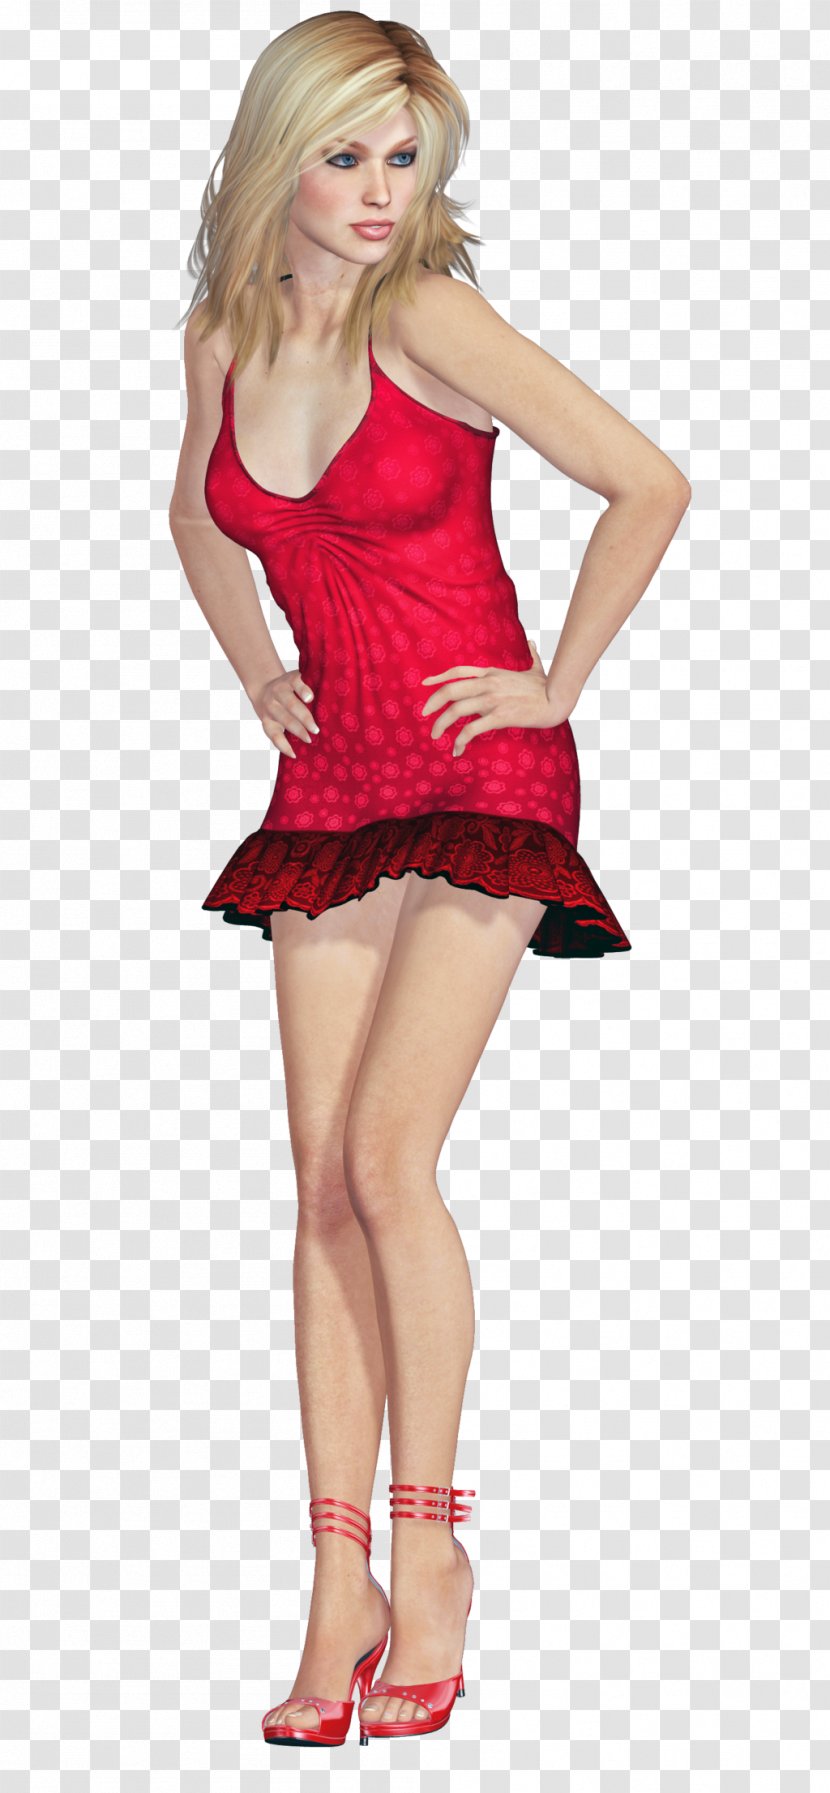 Clothing Woman Model Dress - Frame Transparent PNG